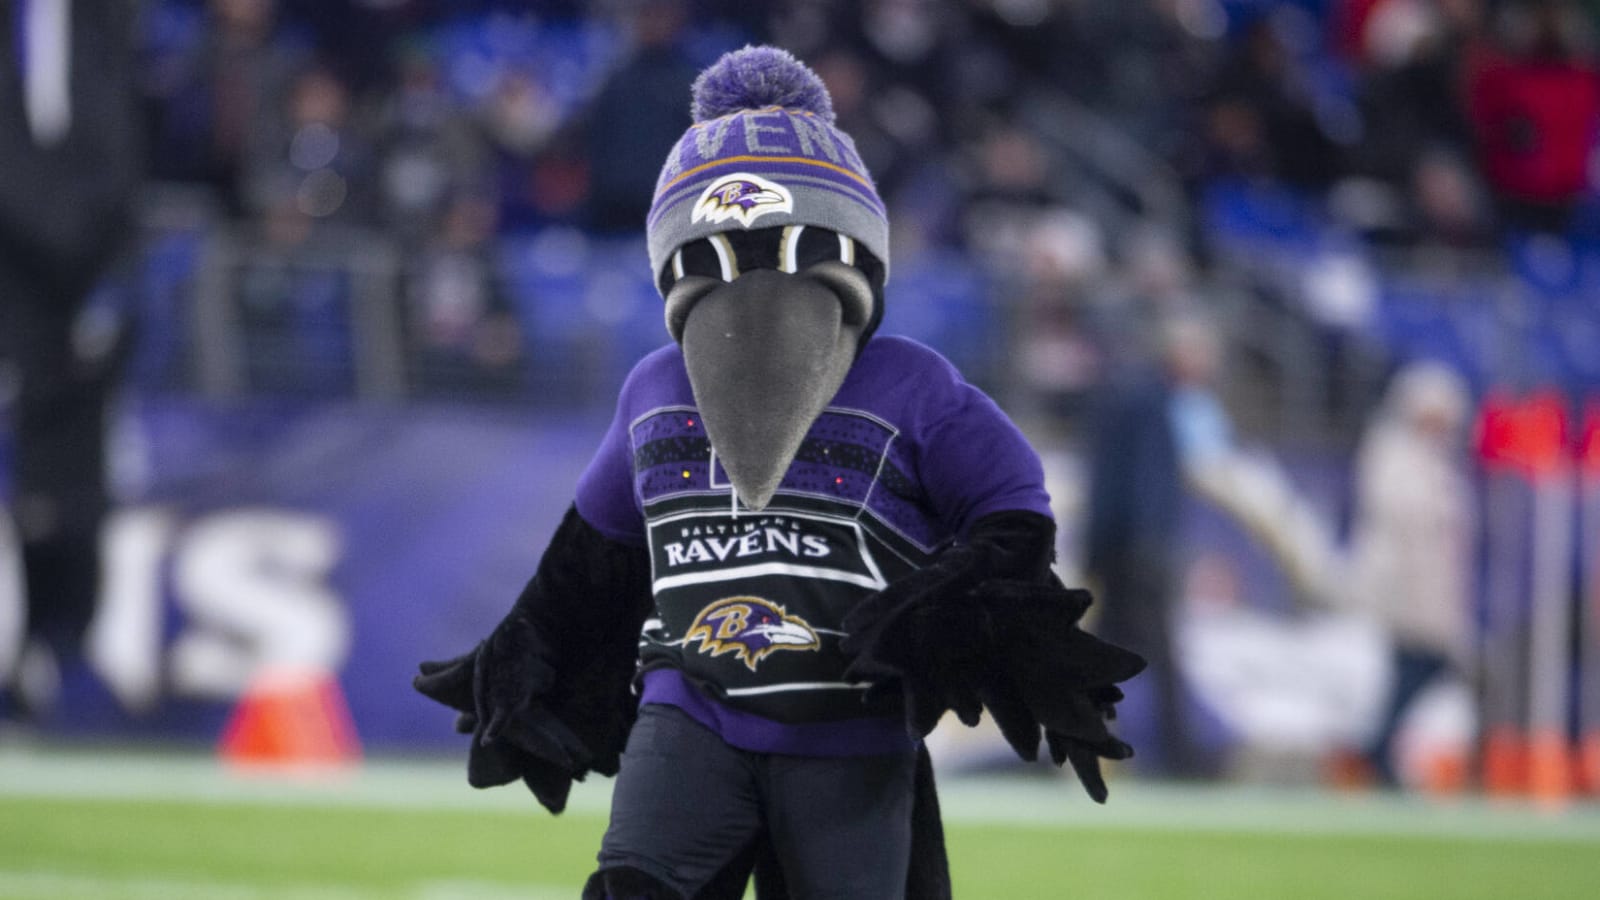 Ravens provide funny update on injured mascot